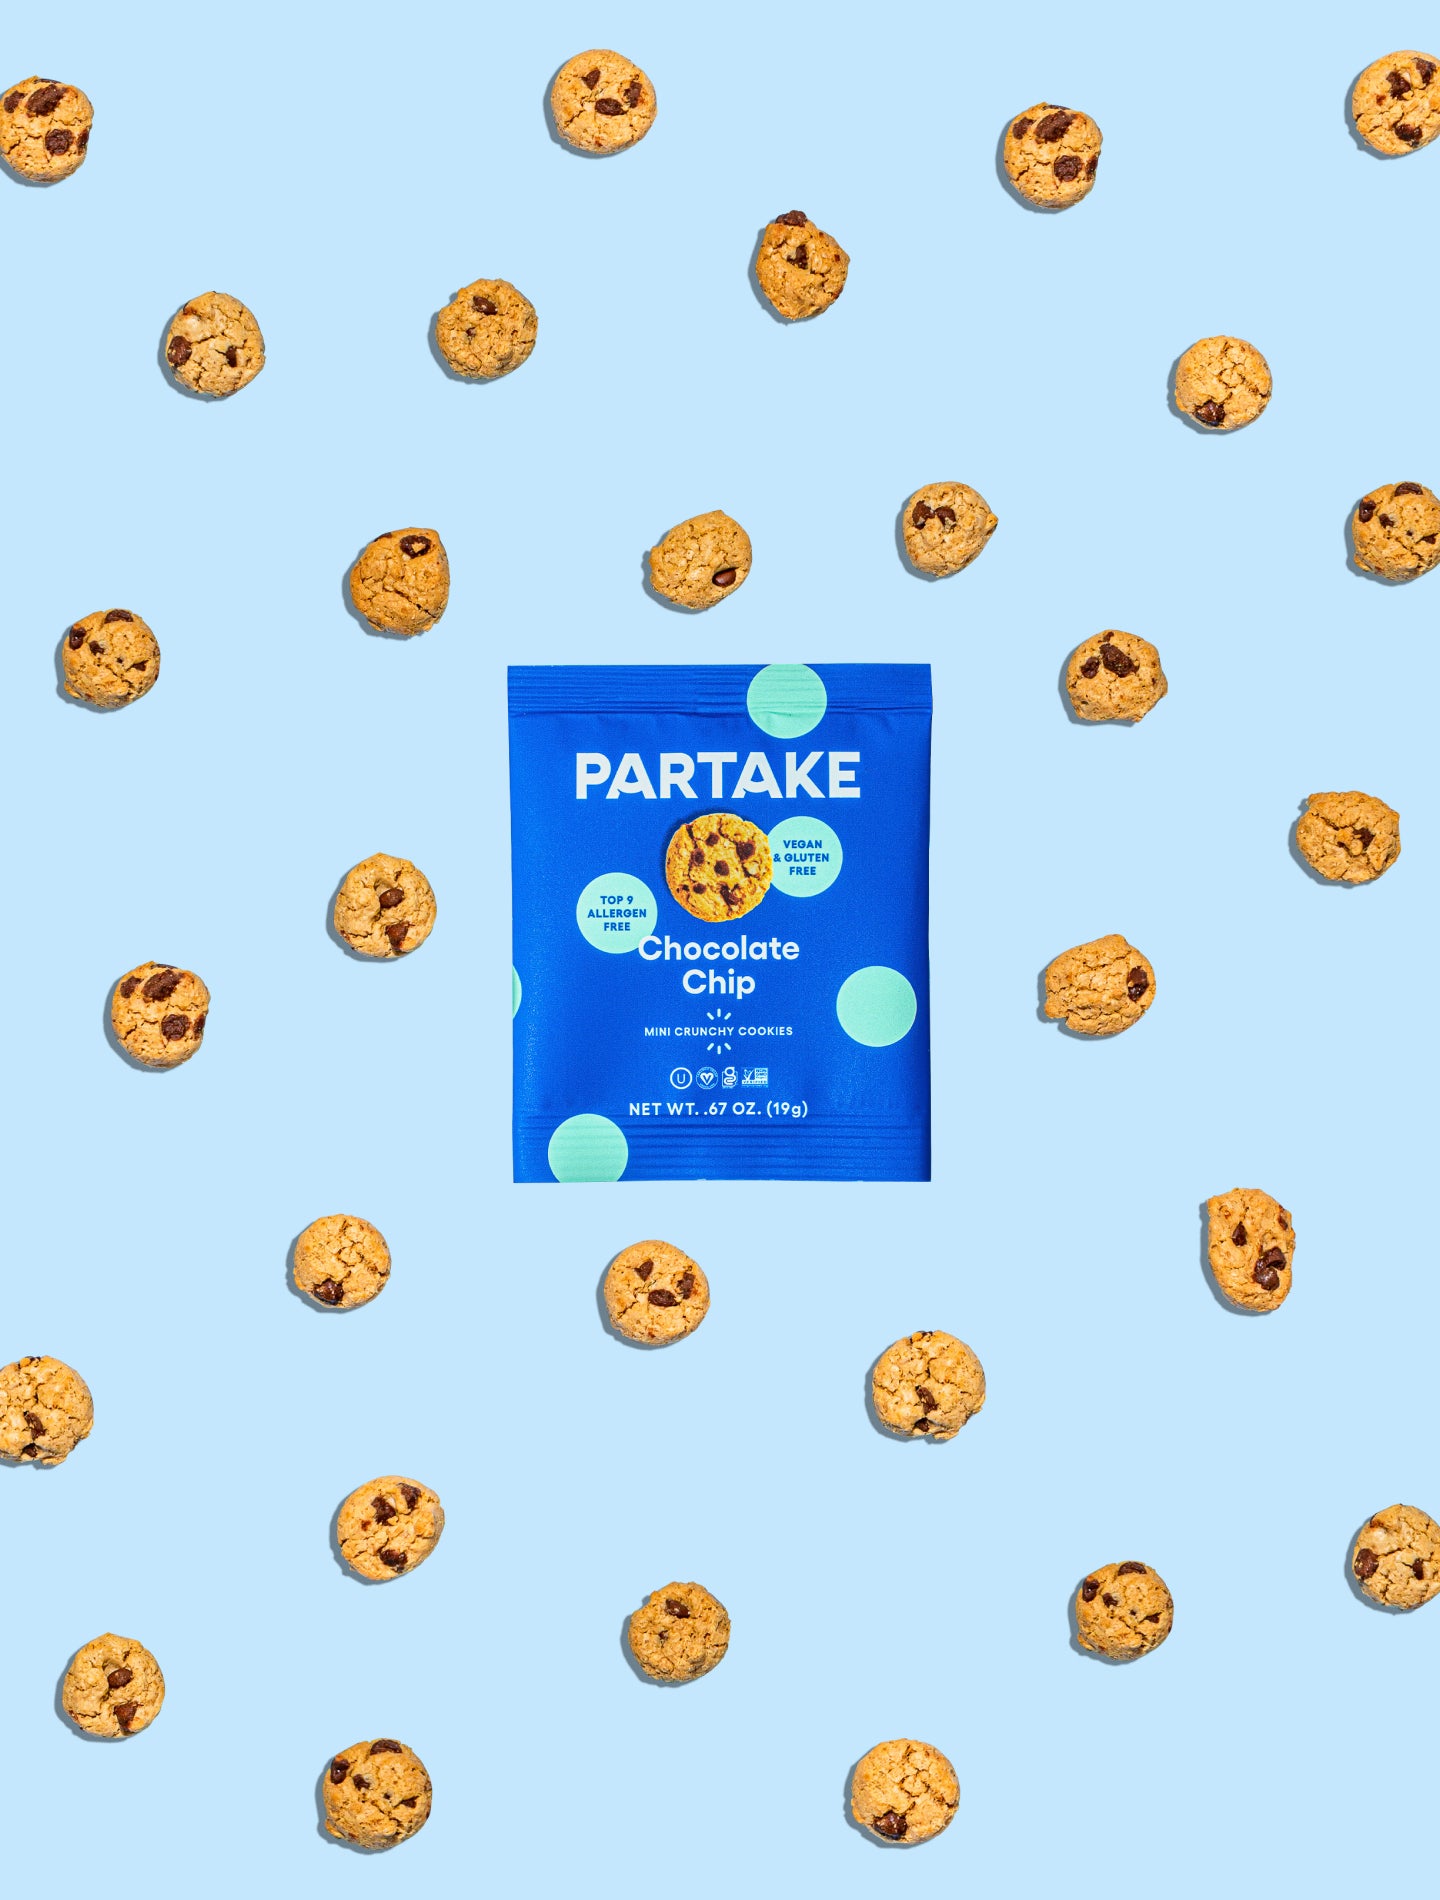 Partake - Mini Crunchy Chocolate Chip Cookie Pouch - 3oz